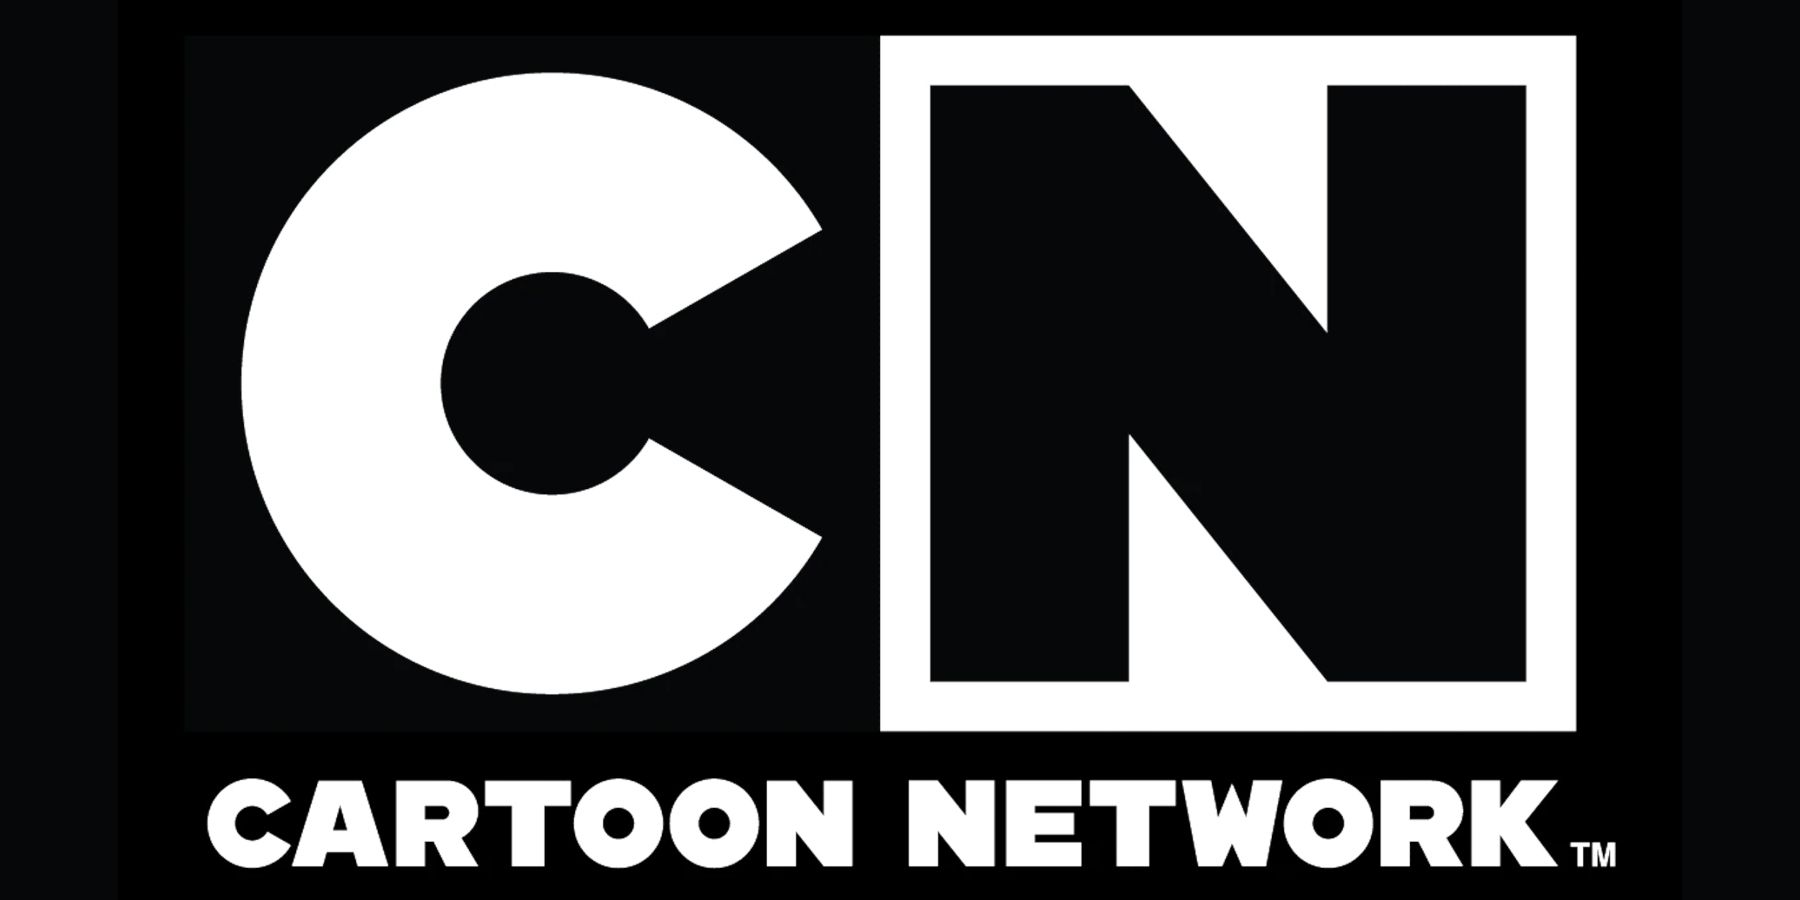 cartoon network logo